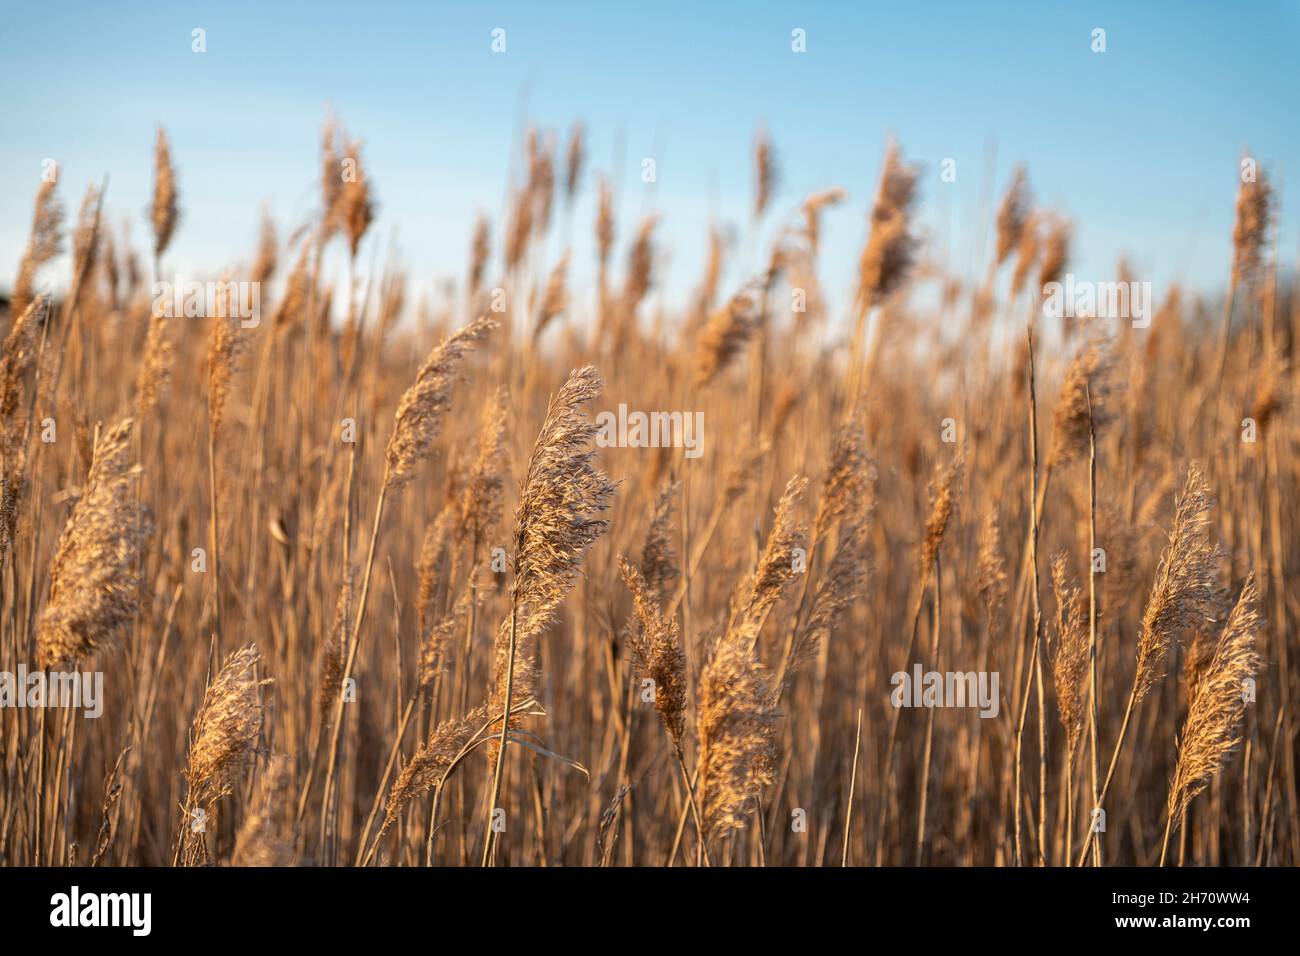 Field of tall grass Stock Photo